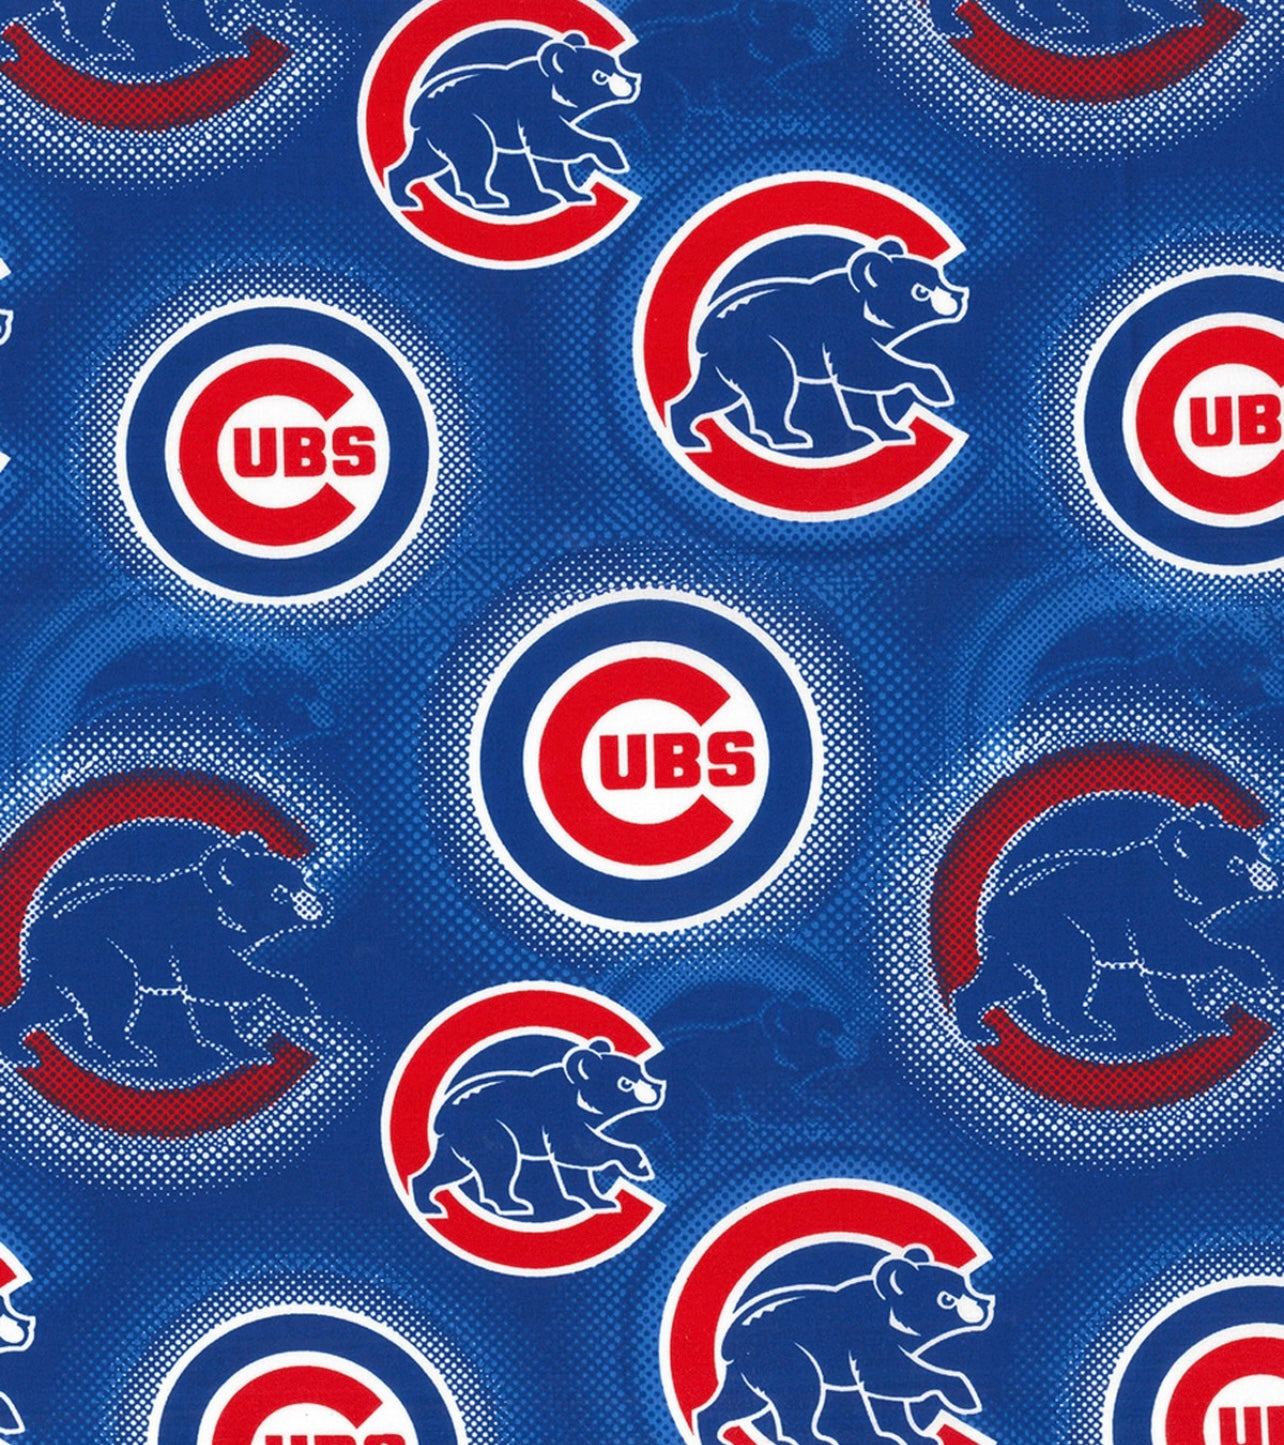 Custom Handmade Jeff Cap in Chicago Cubs Print Fabric